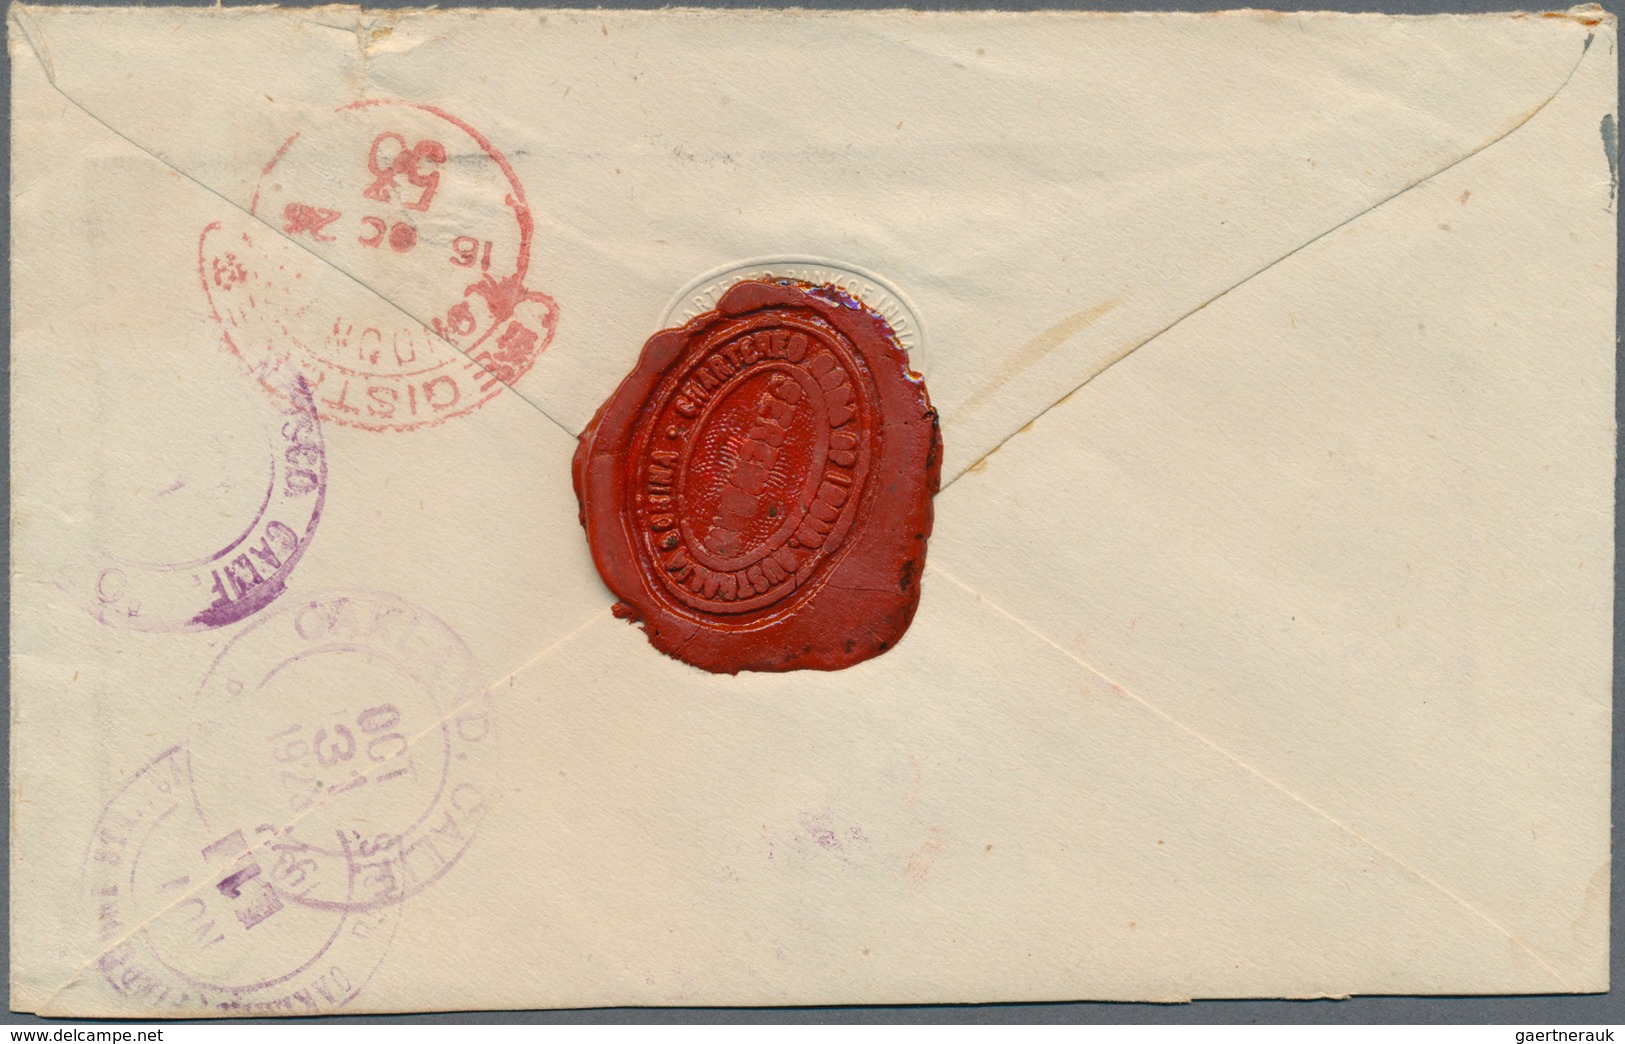 06113 Malaiische Staaten - Negri Sembilan: 1920/1929, SEREMBAN: Federated Malay States Registered Letter 1 - Negri Sembilan